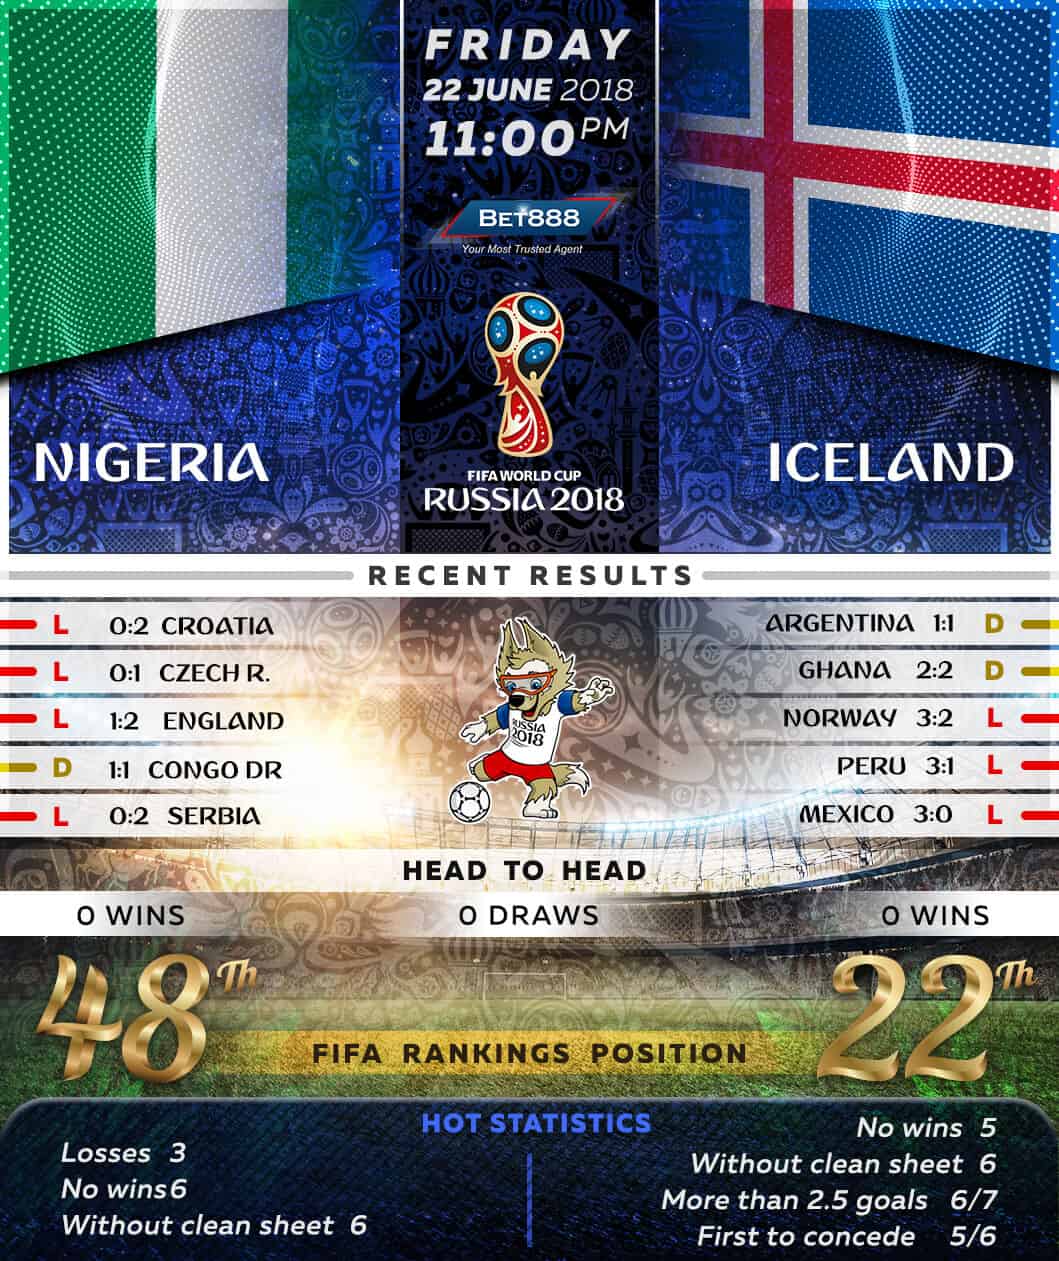 Nigeria vs Iceland 22/06/18